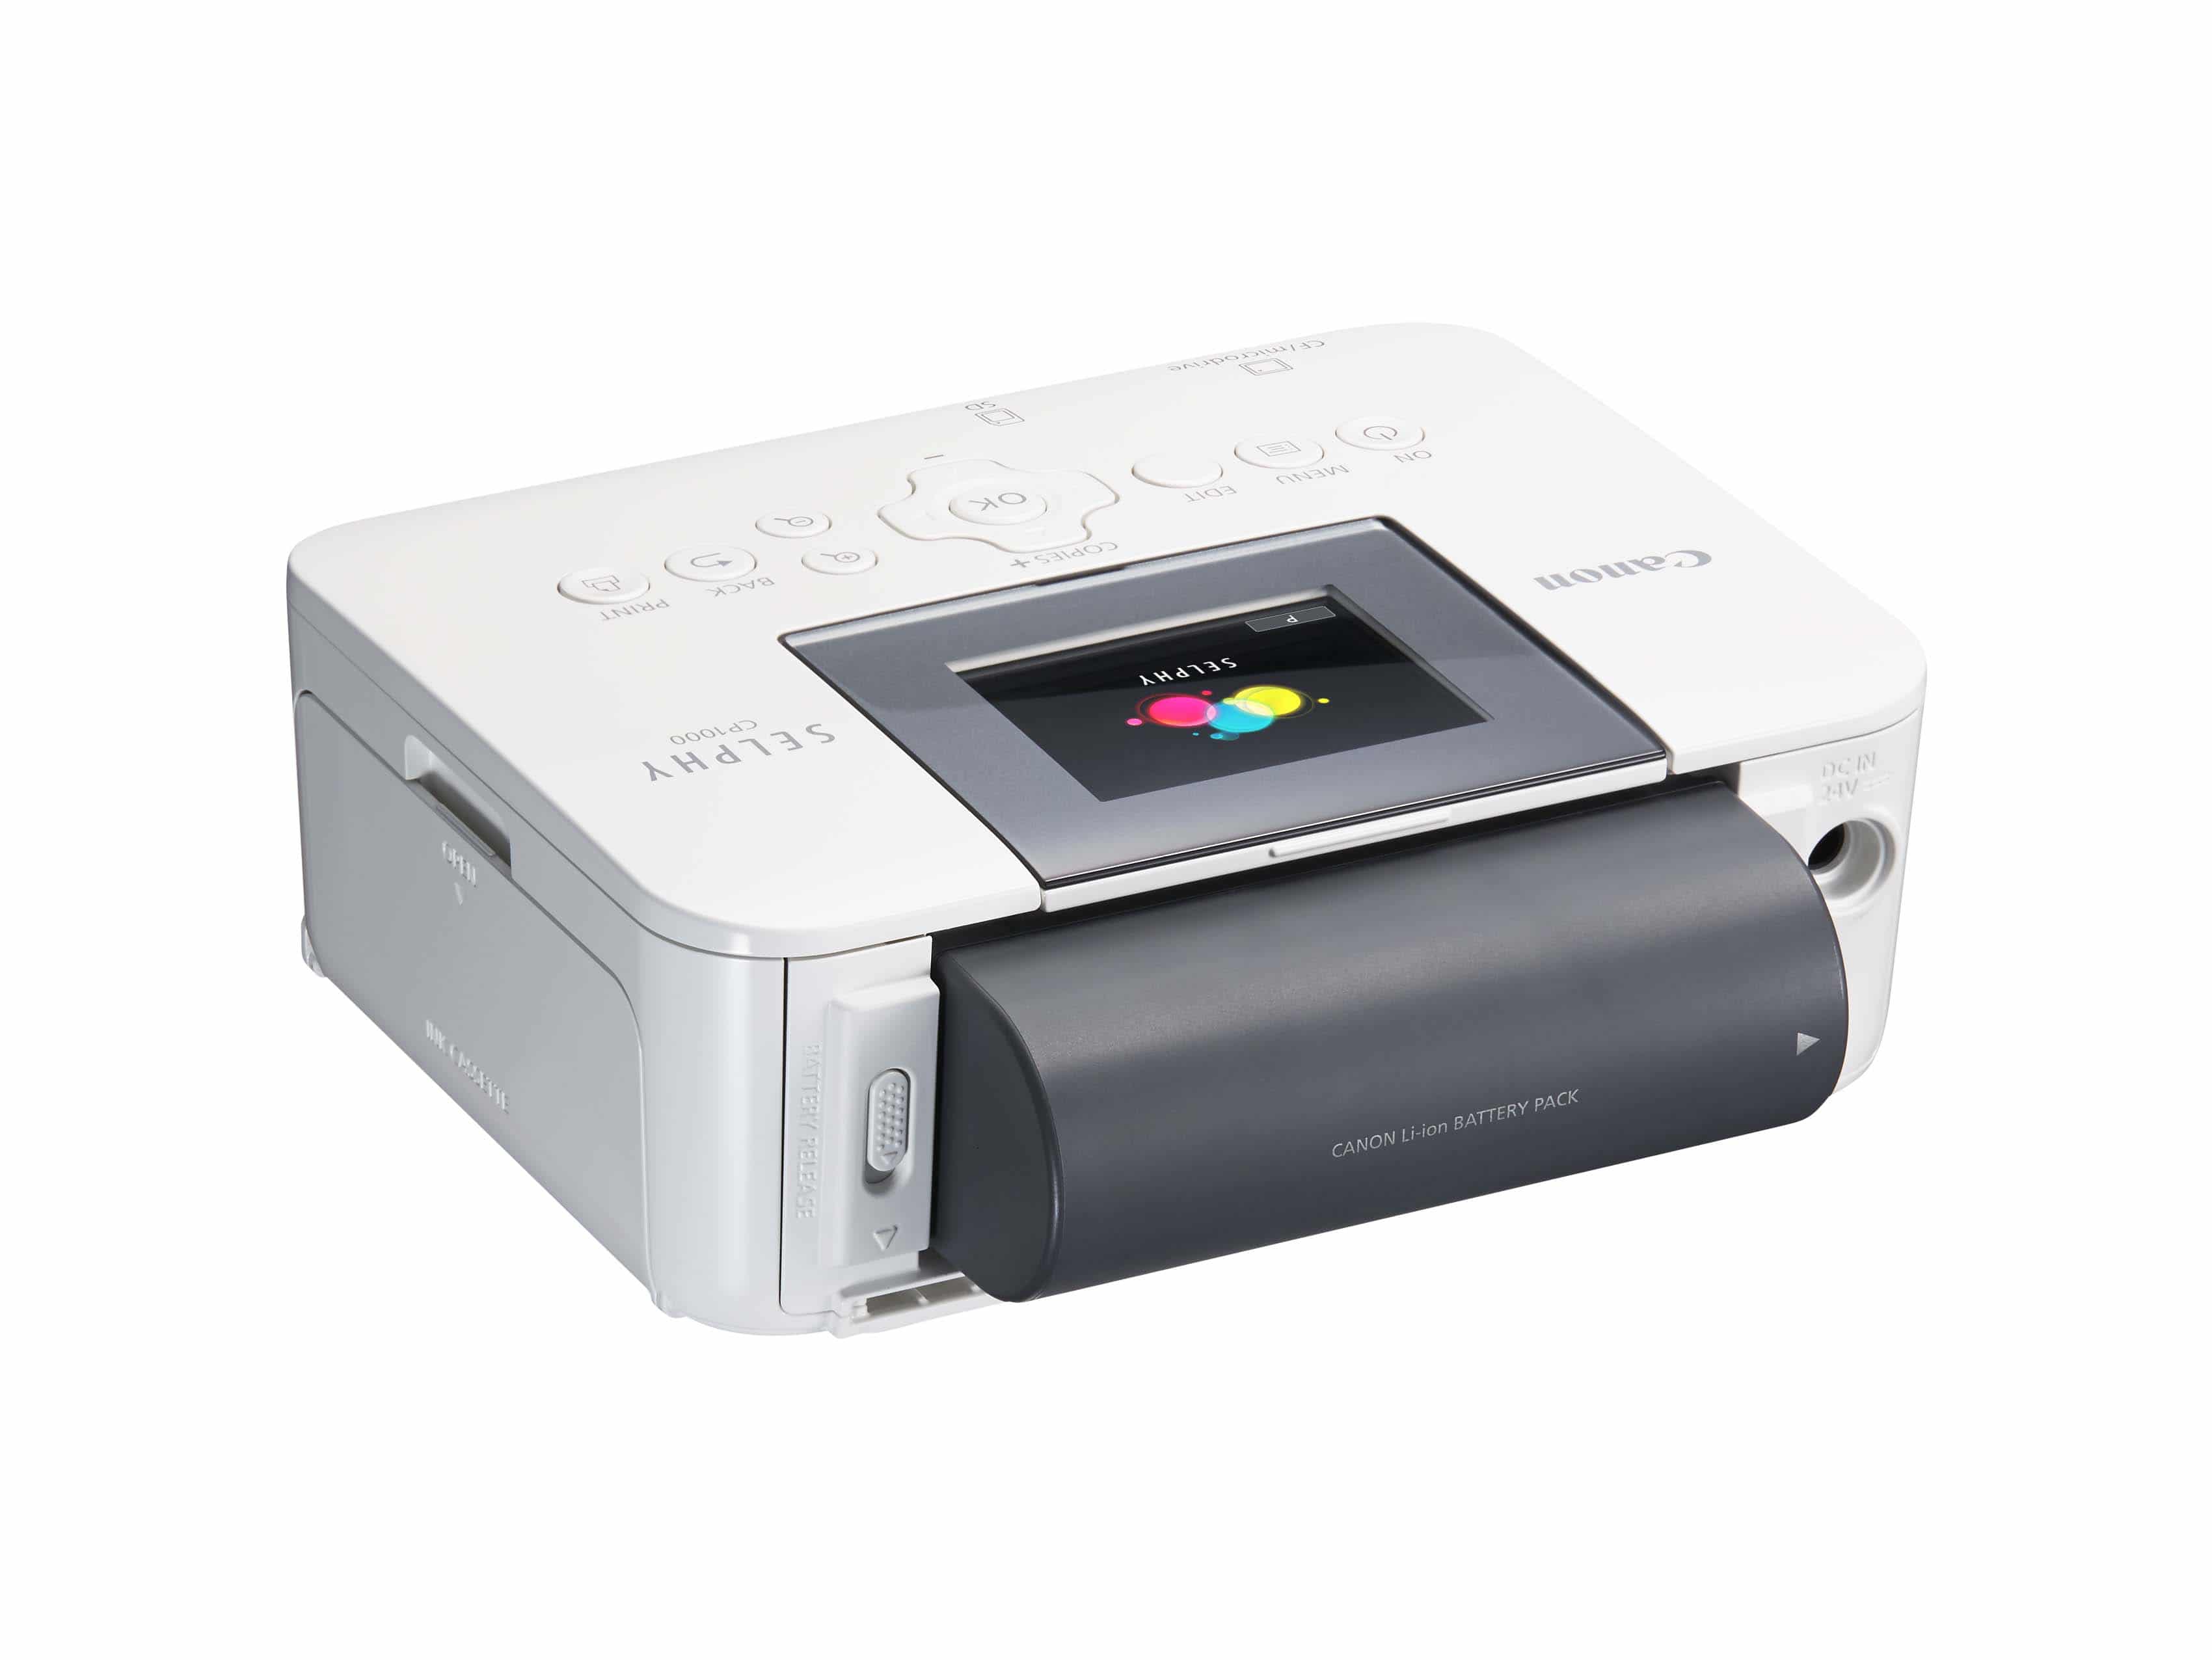 Canon Selphy CP 1000 Fotodrucker im Test › TintenCenter Blog